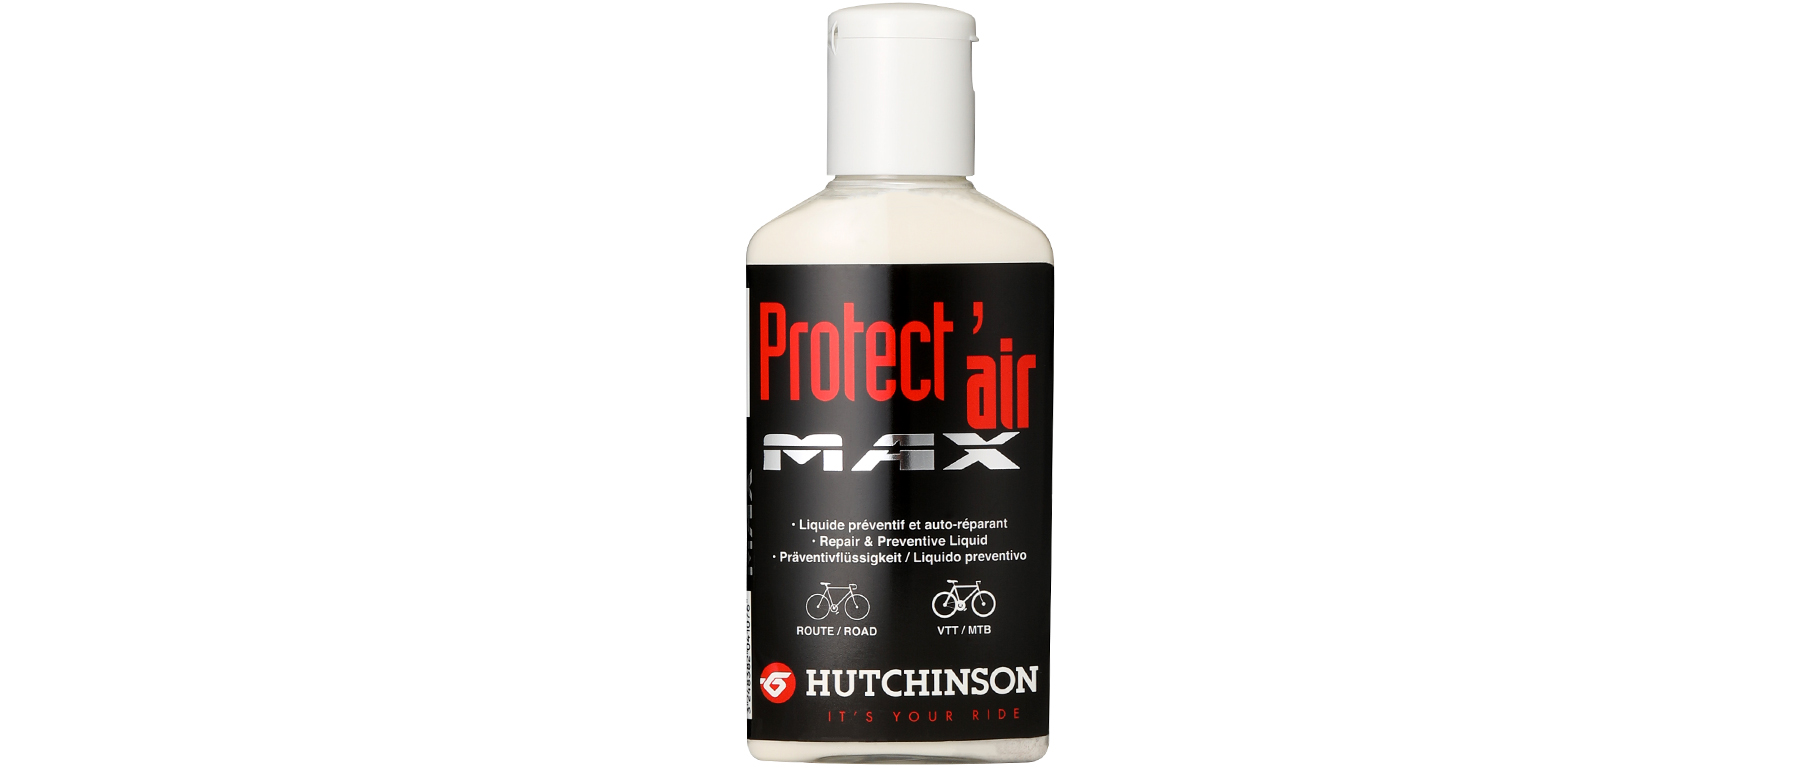 Hutchinson Protect Air Max Liquid Sealant